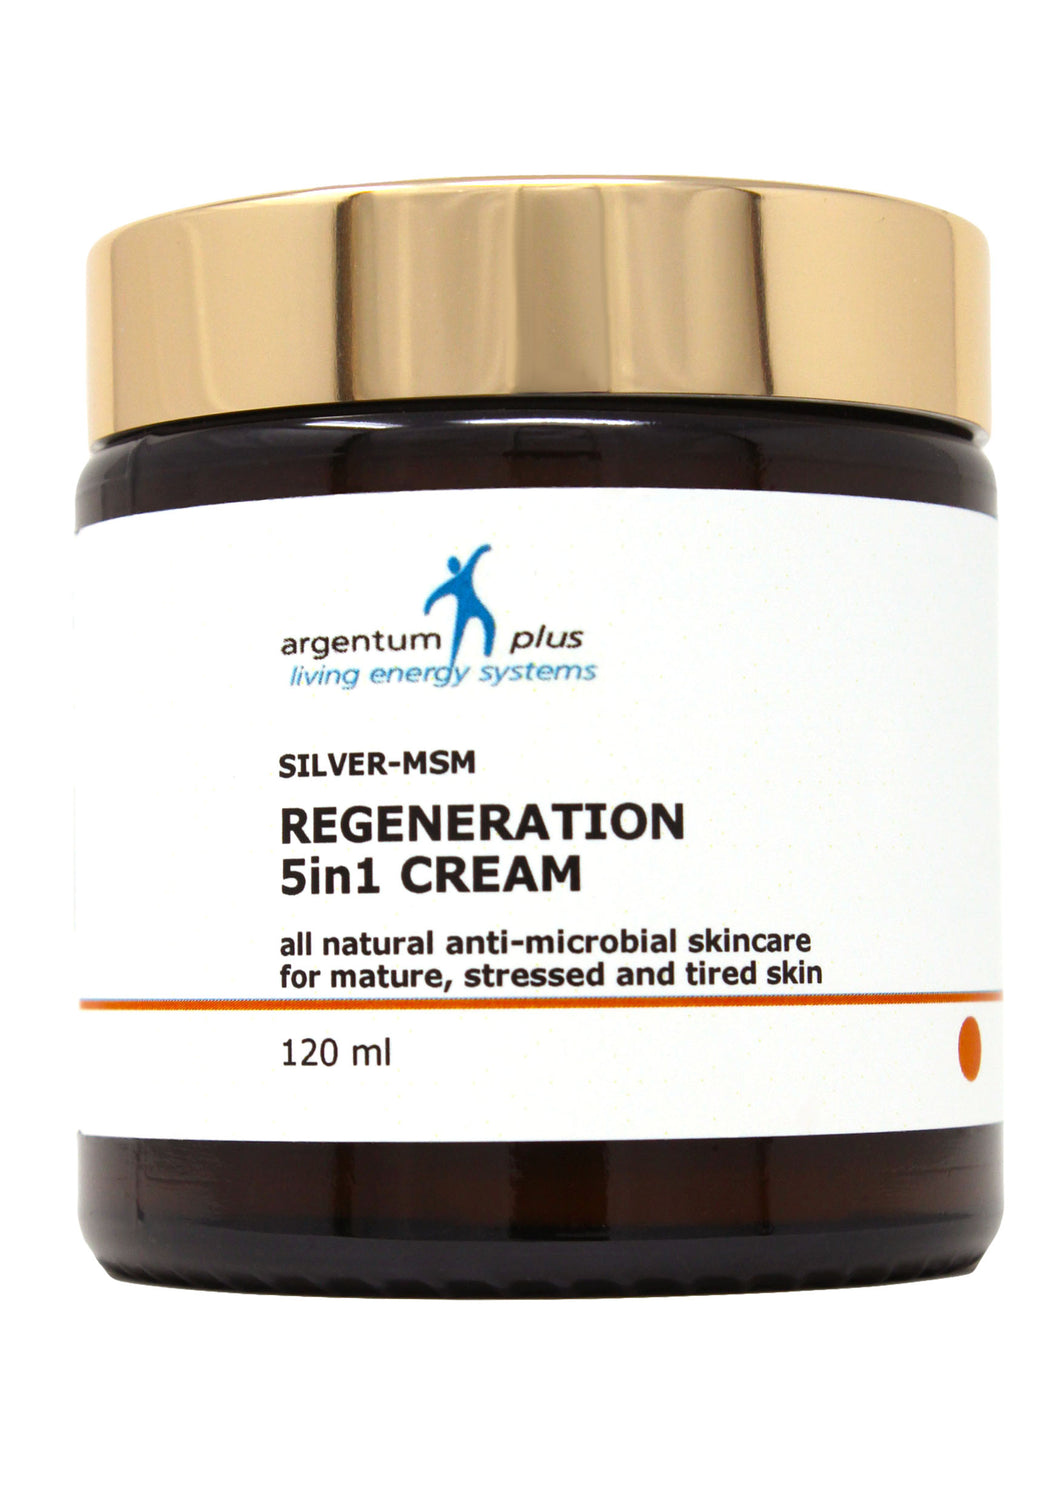 Silver-MSM Regeneration Cream 5-in-1 (3 size options)